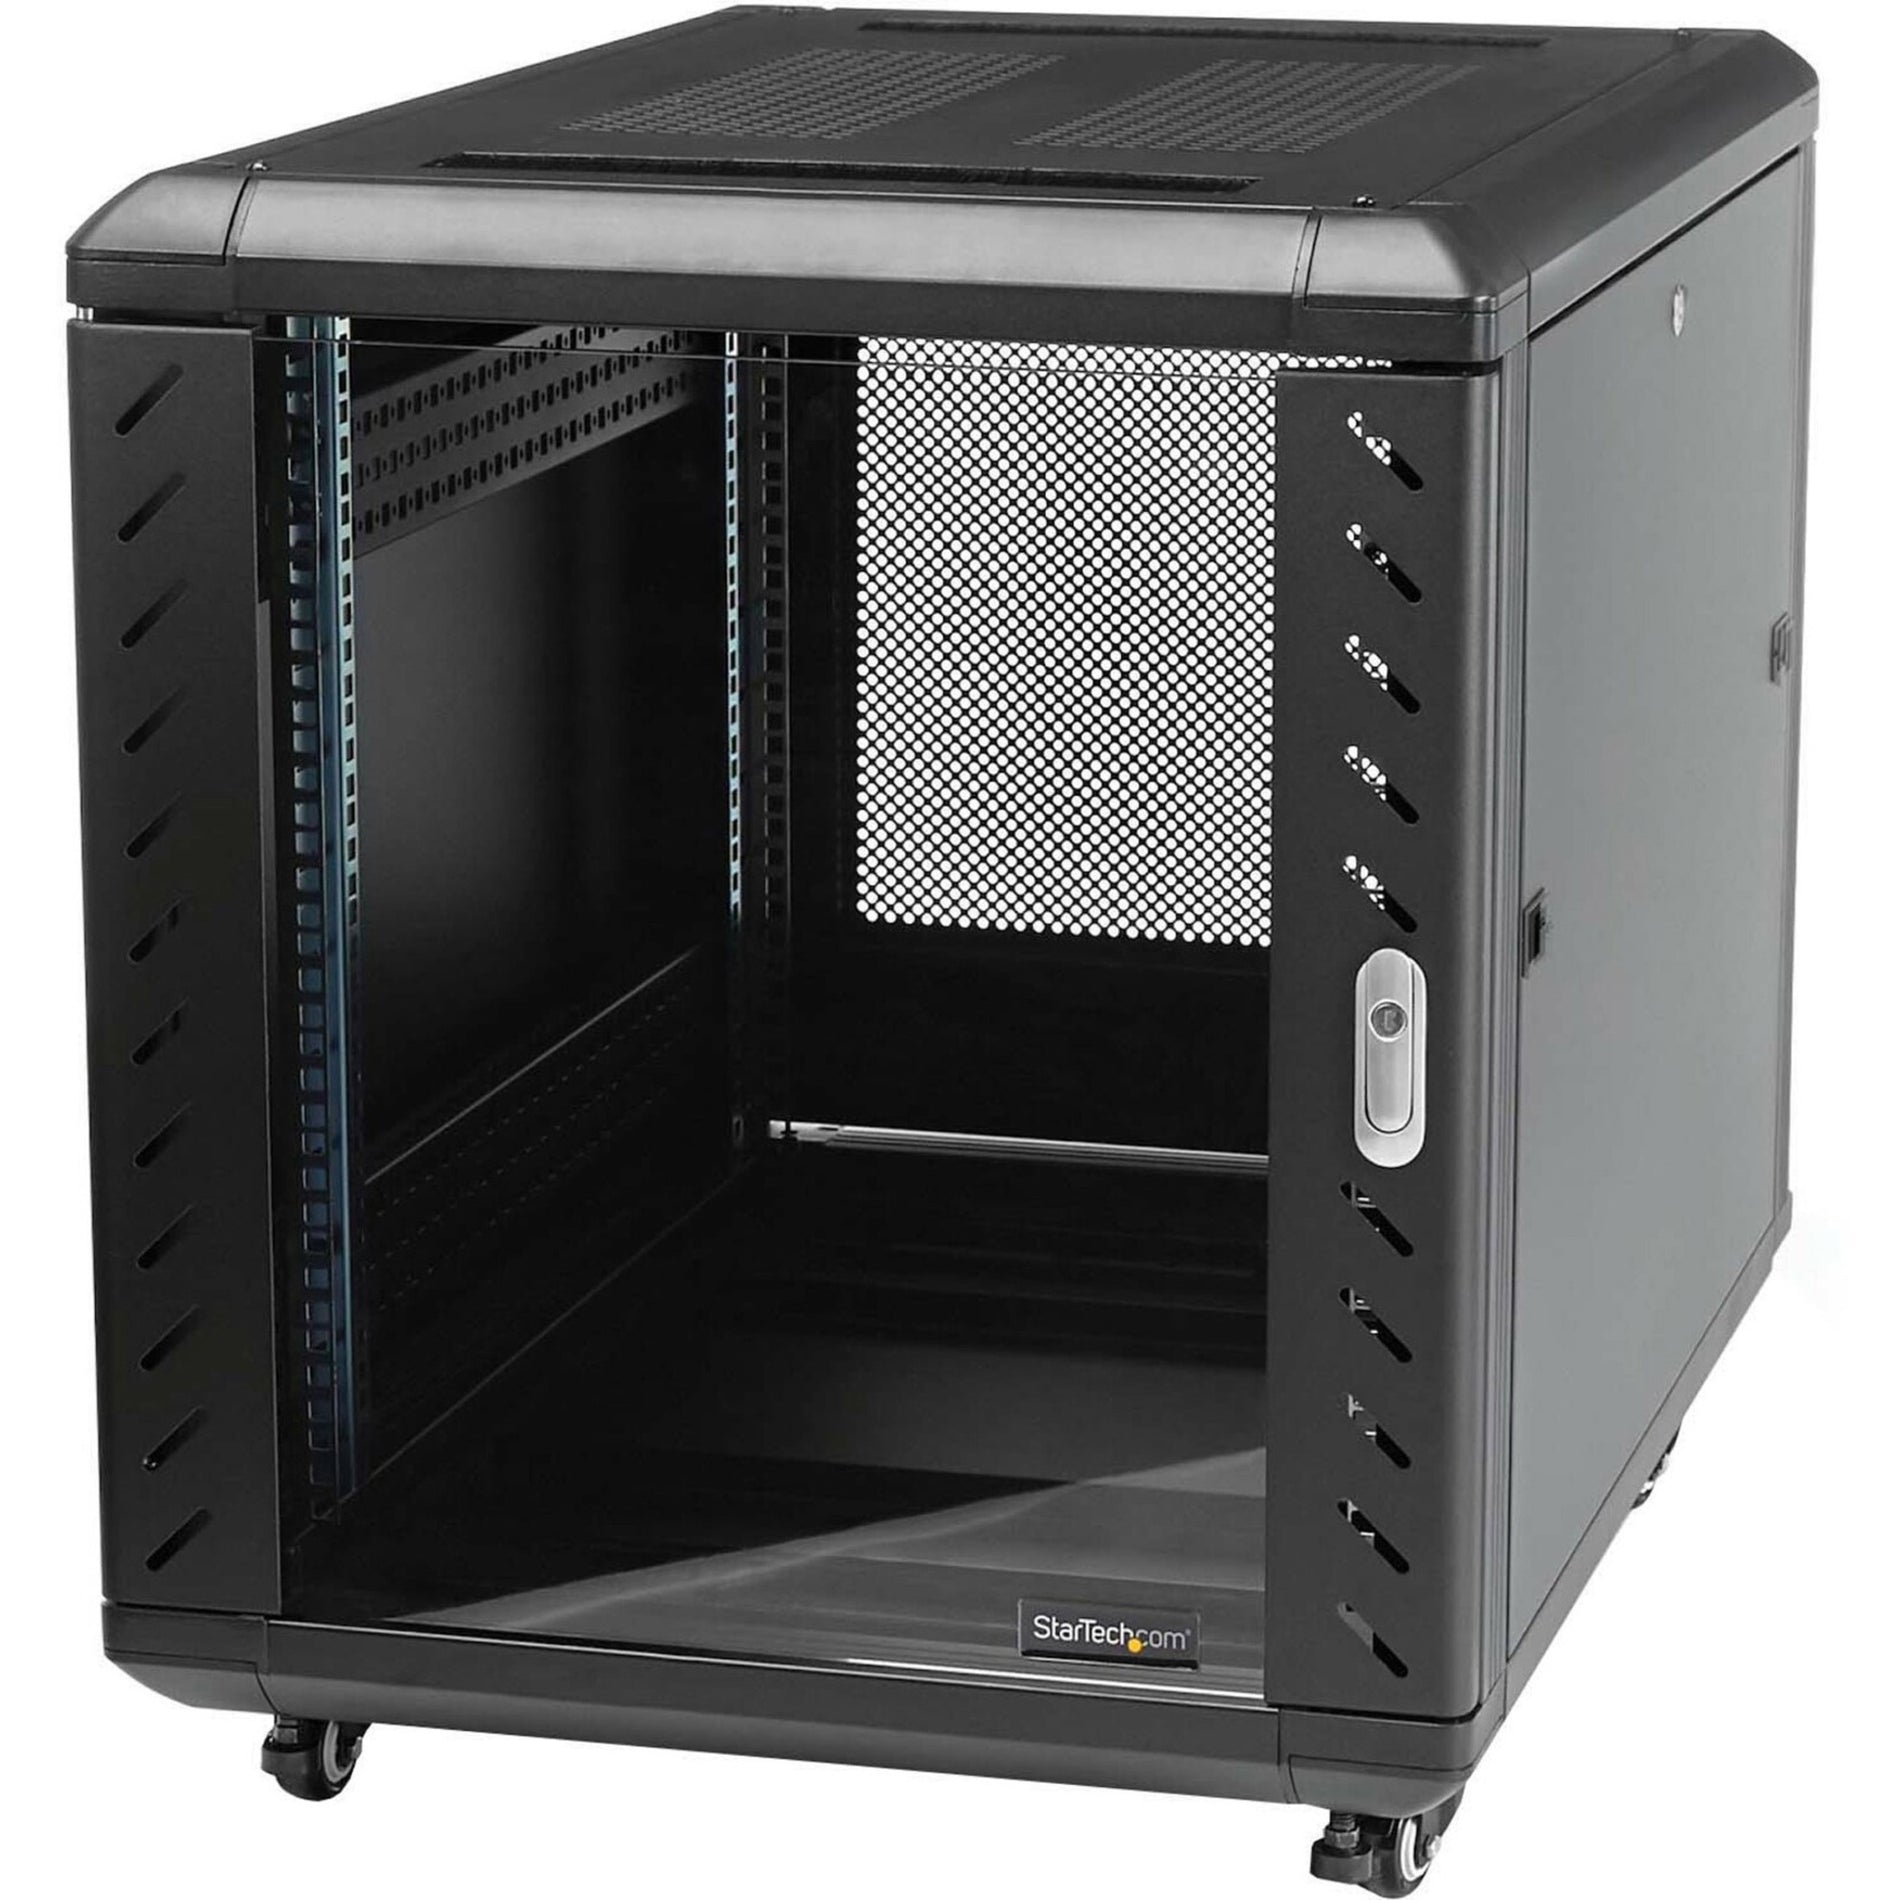 StarTech.com RK1536BKF 15U Server Rack Cabinet - Includes Casters and Leveling feet - 32 in. Deep, Floor Standing, Black